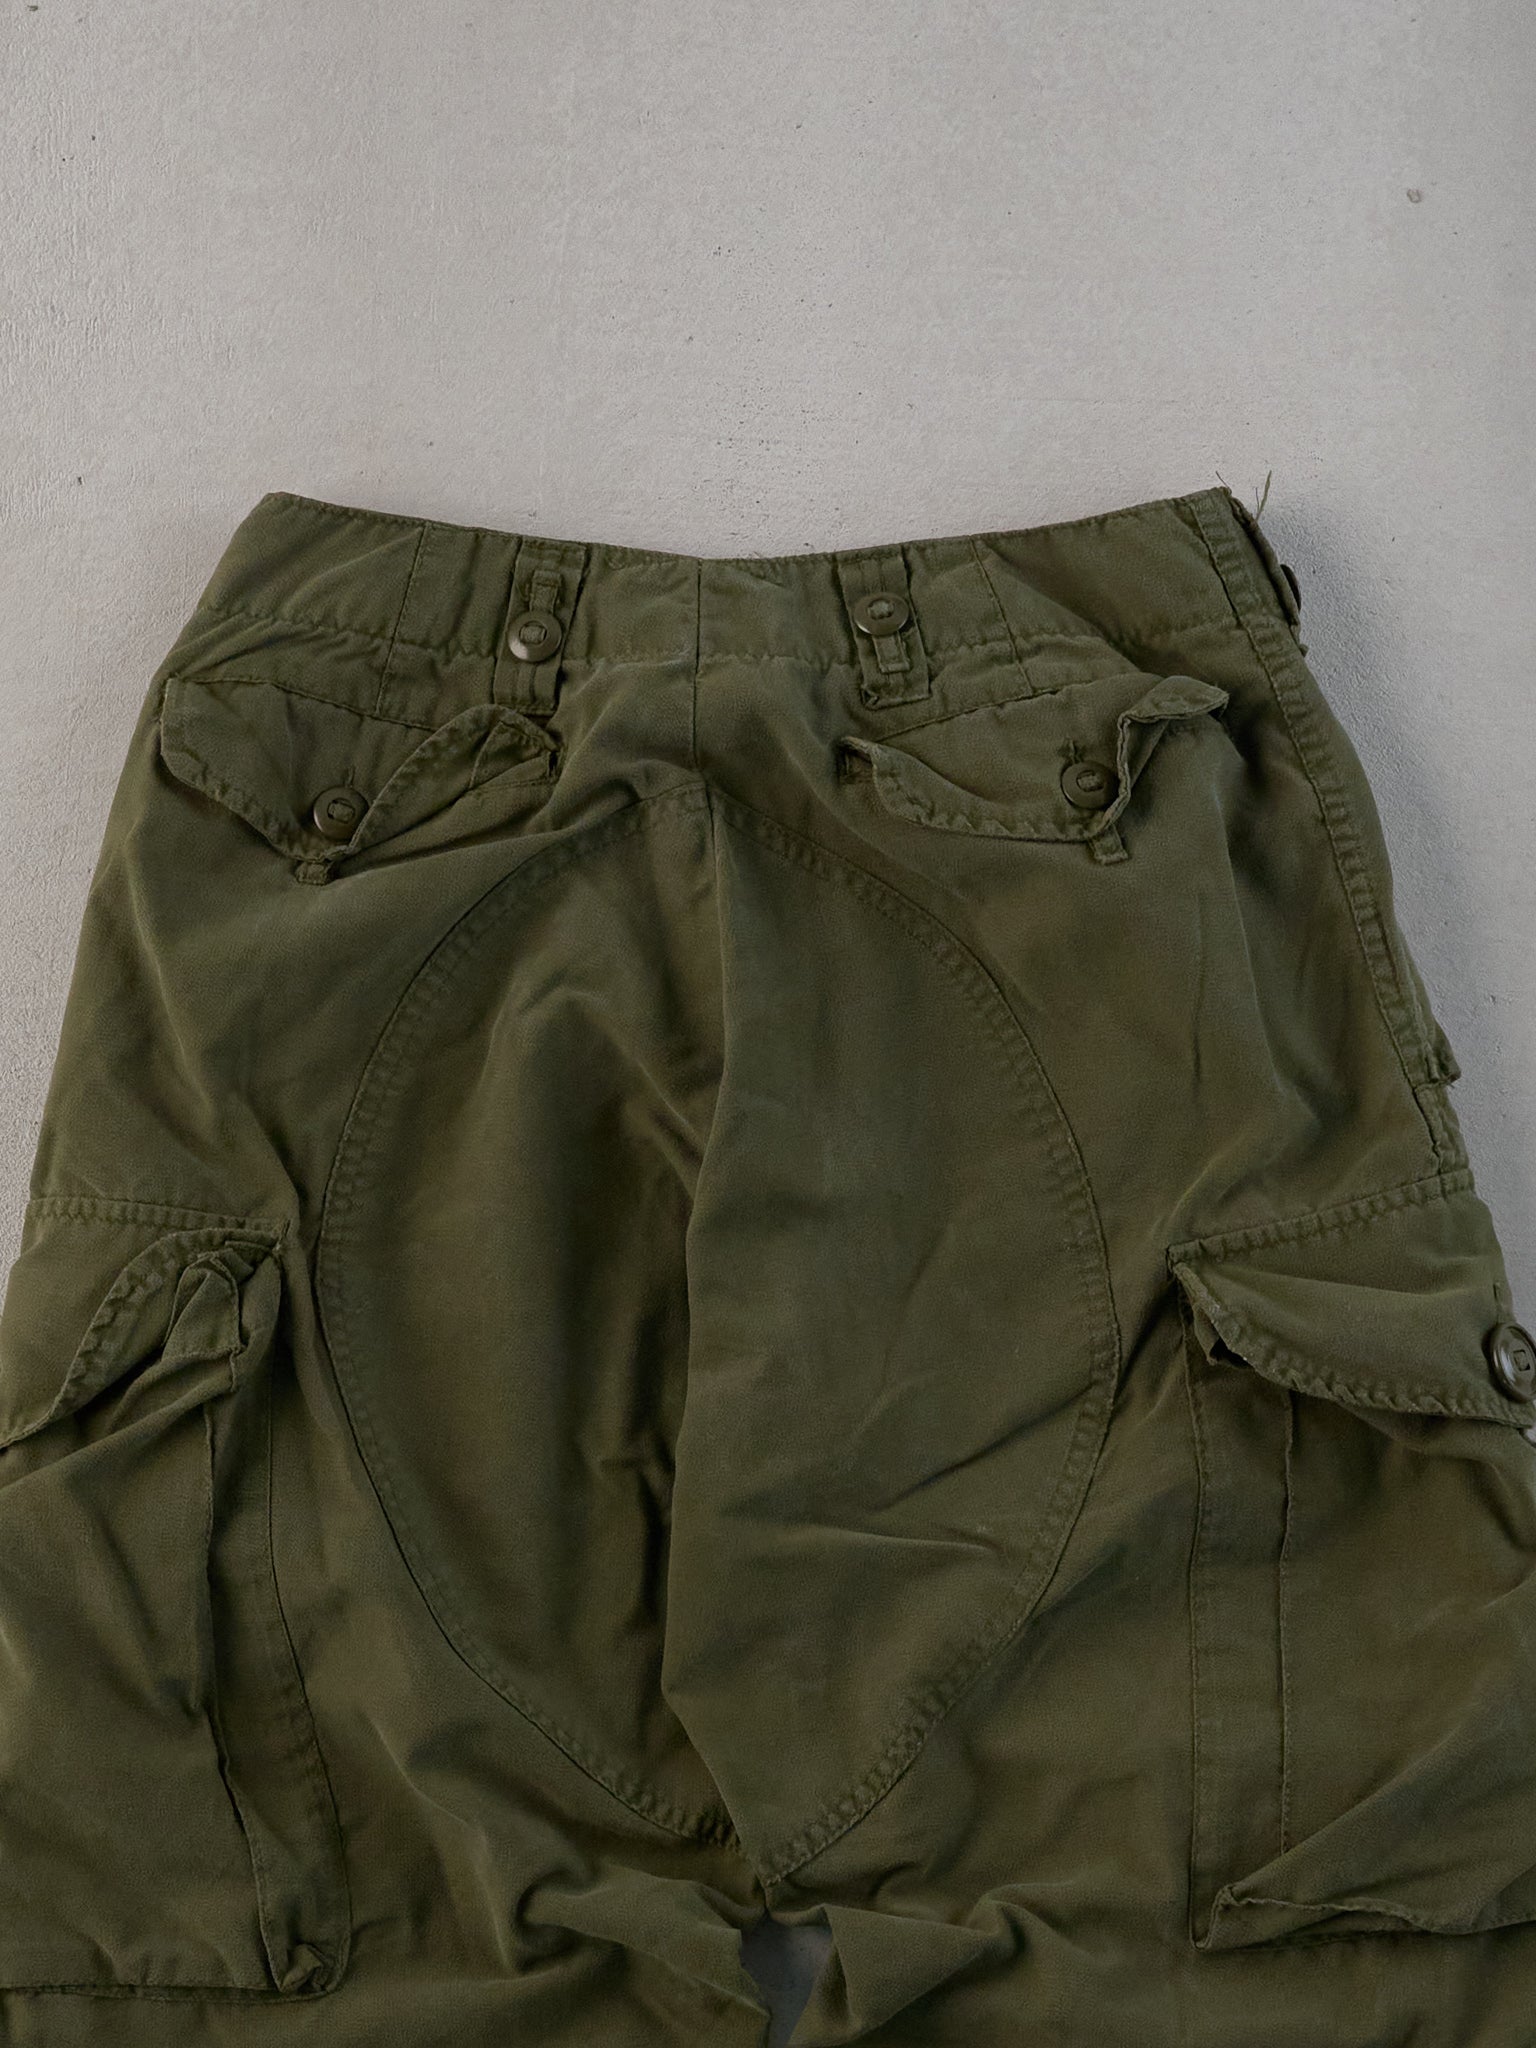 Vintage 90s Green Army Parachute Cargo Pants (30x24)